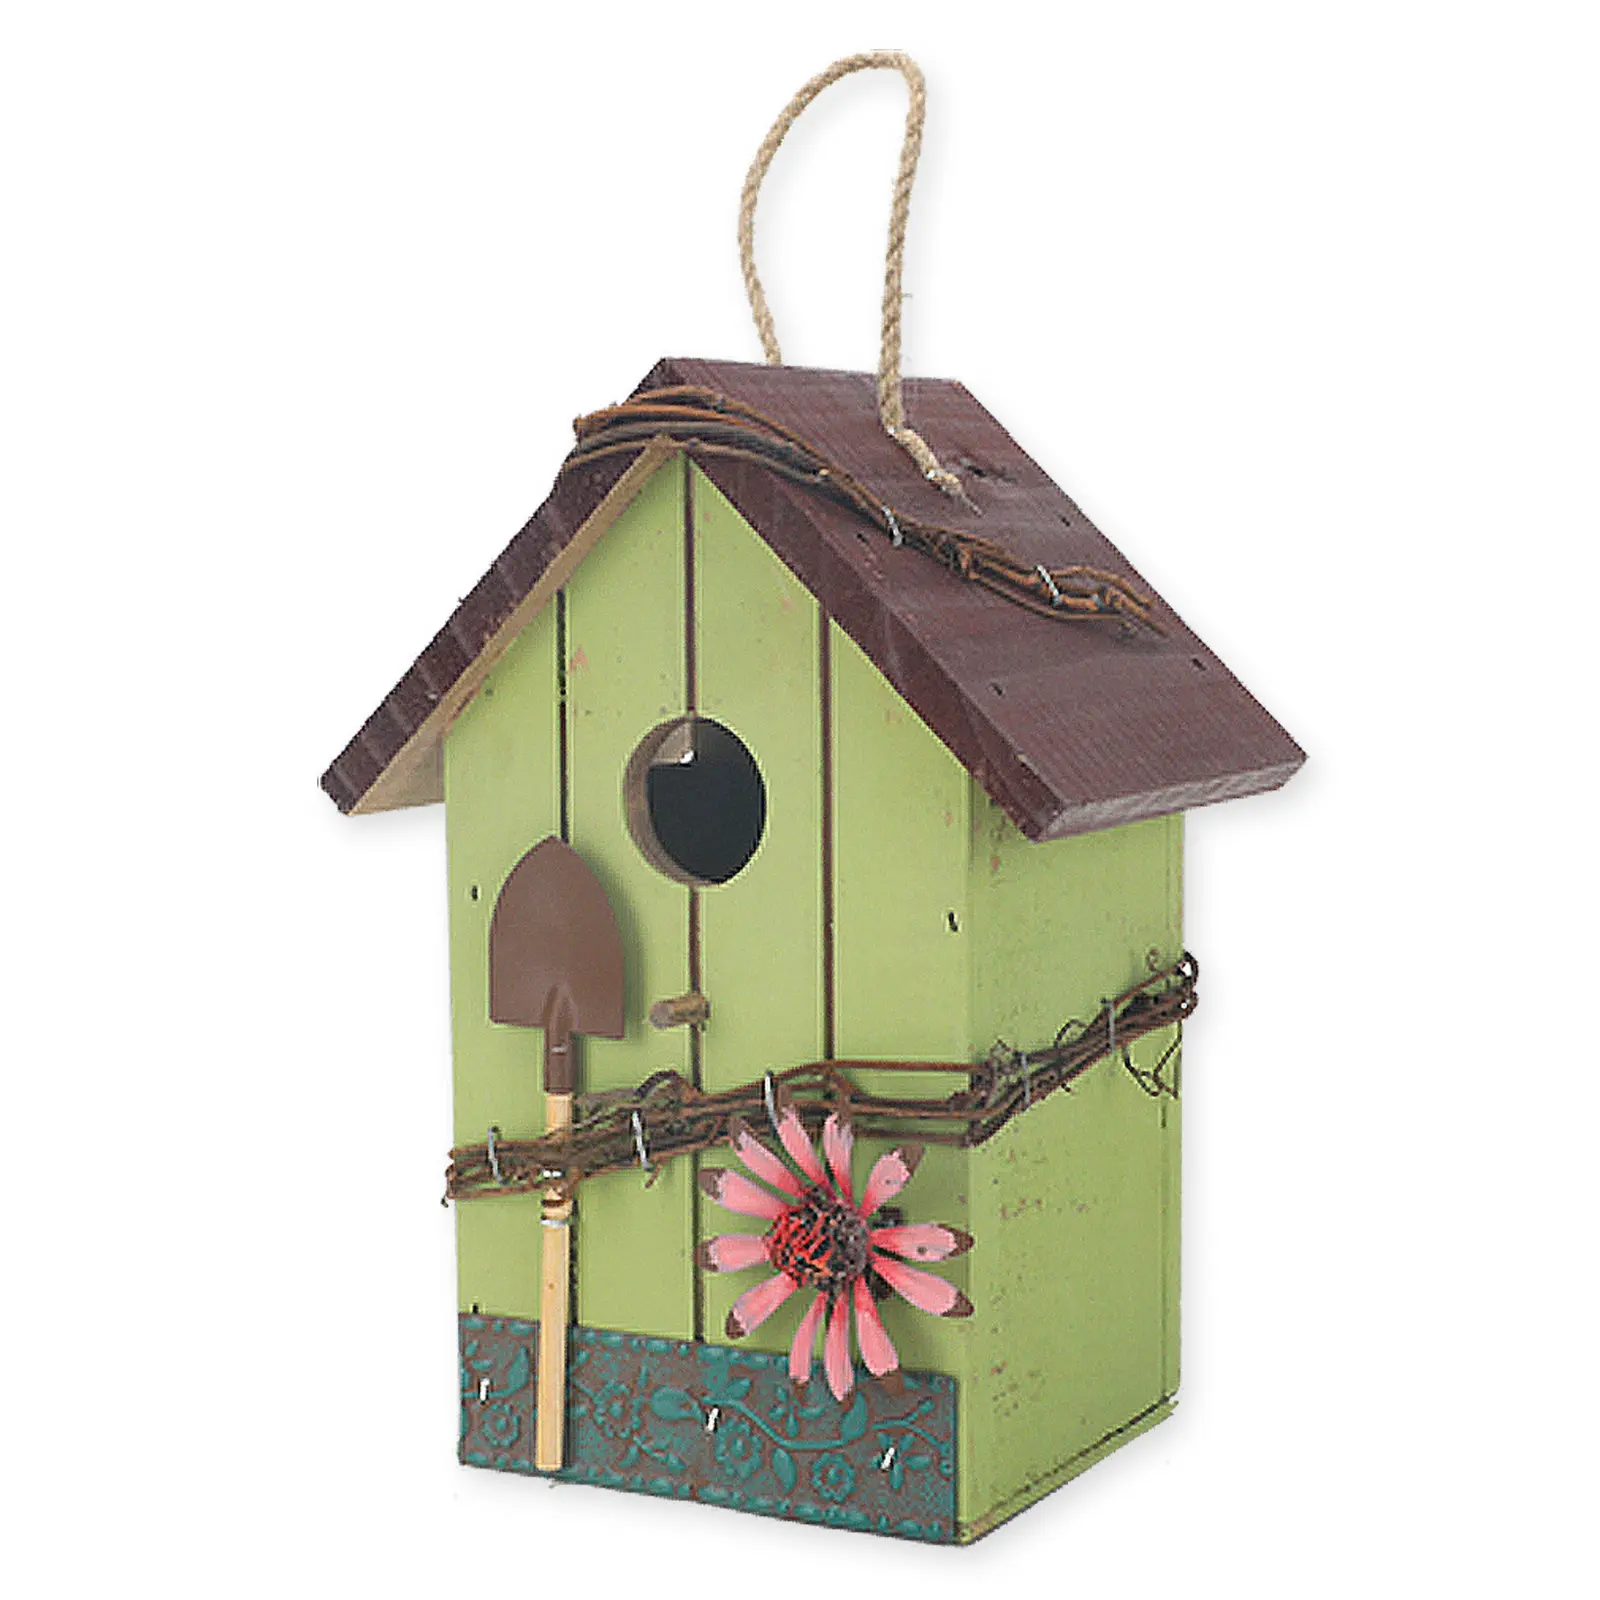 Outdoor Decoration DIY High Quality Wooden Garden Feeder Tree Bird House